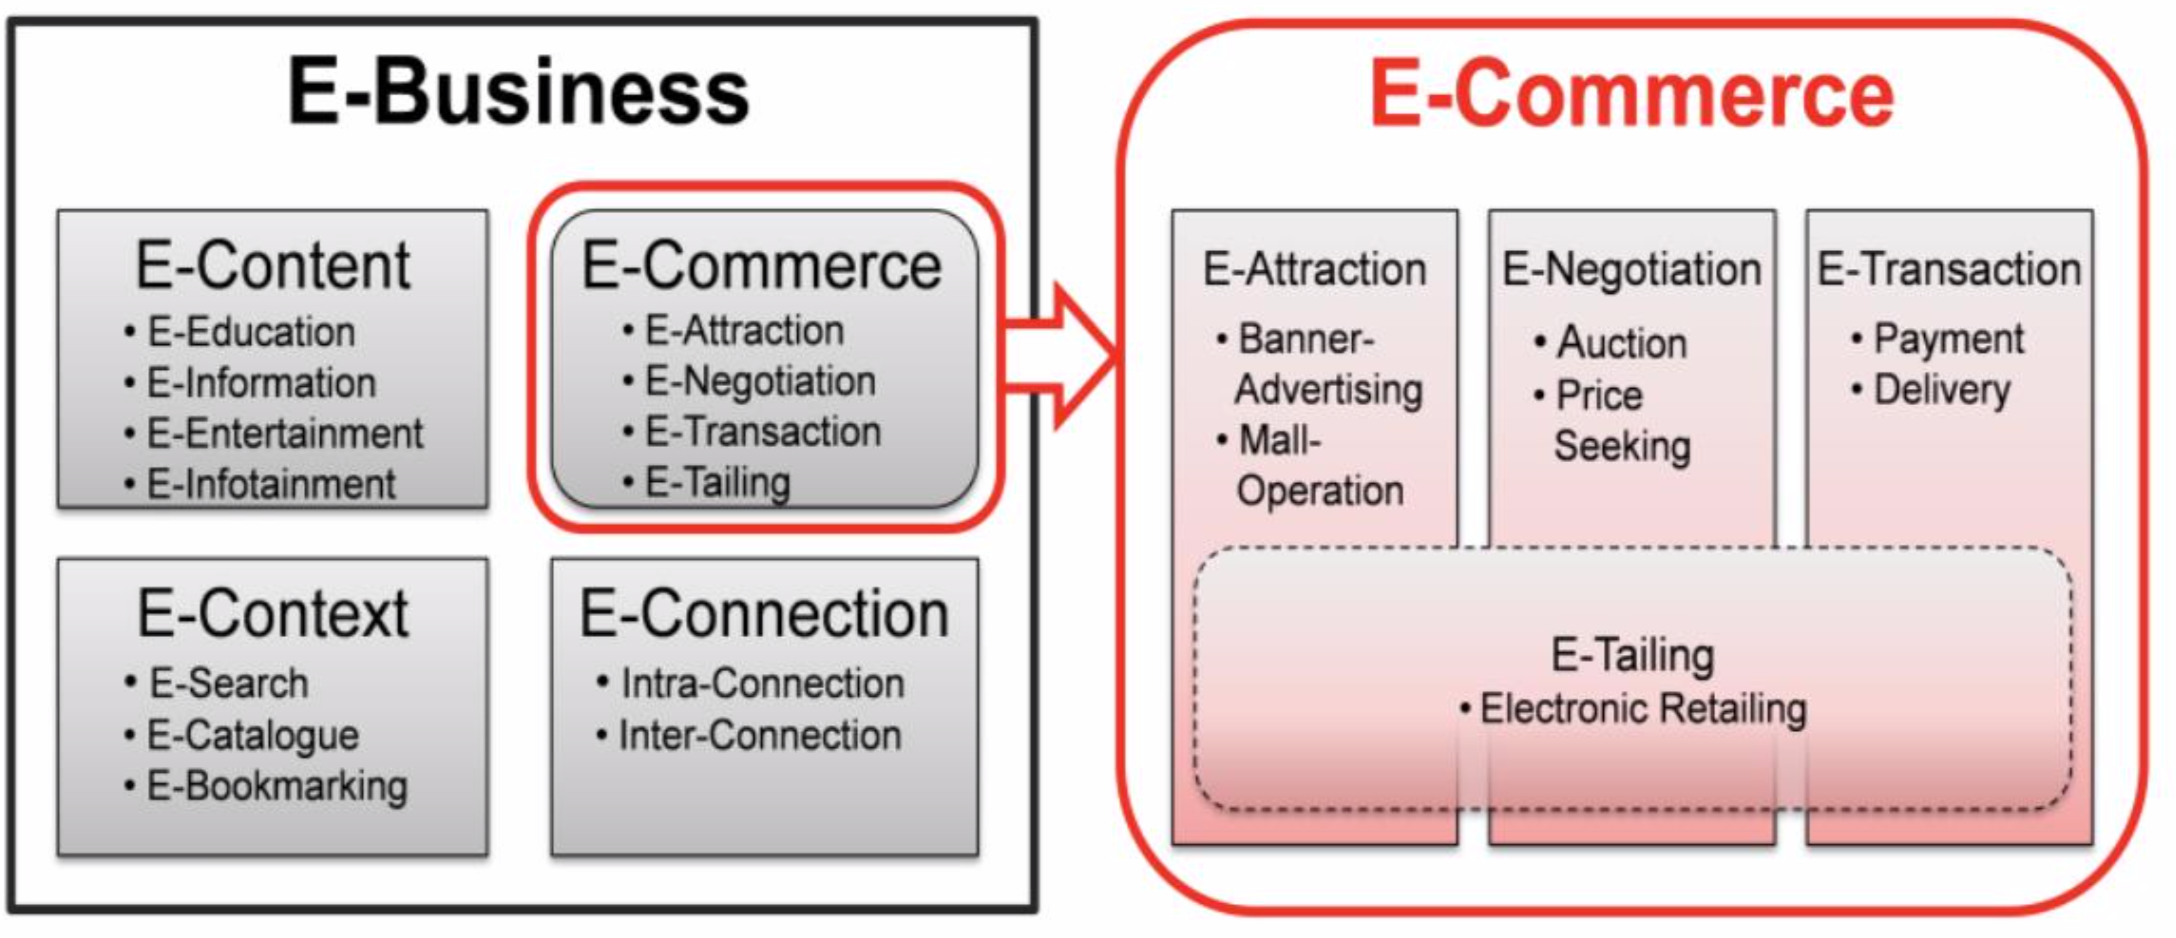 E-Business-E-Commerce